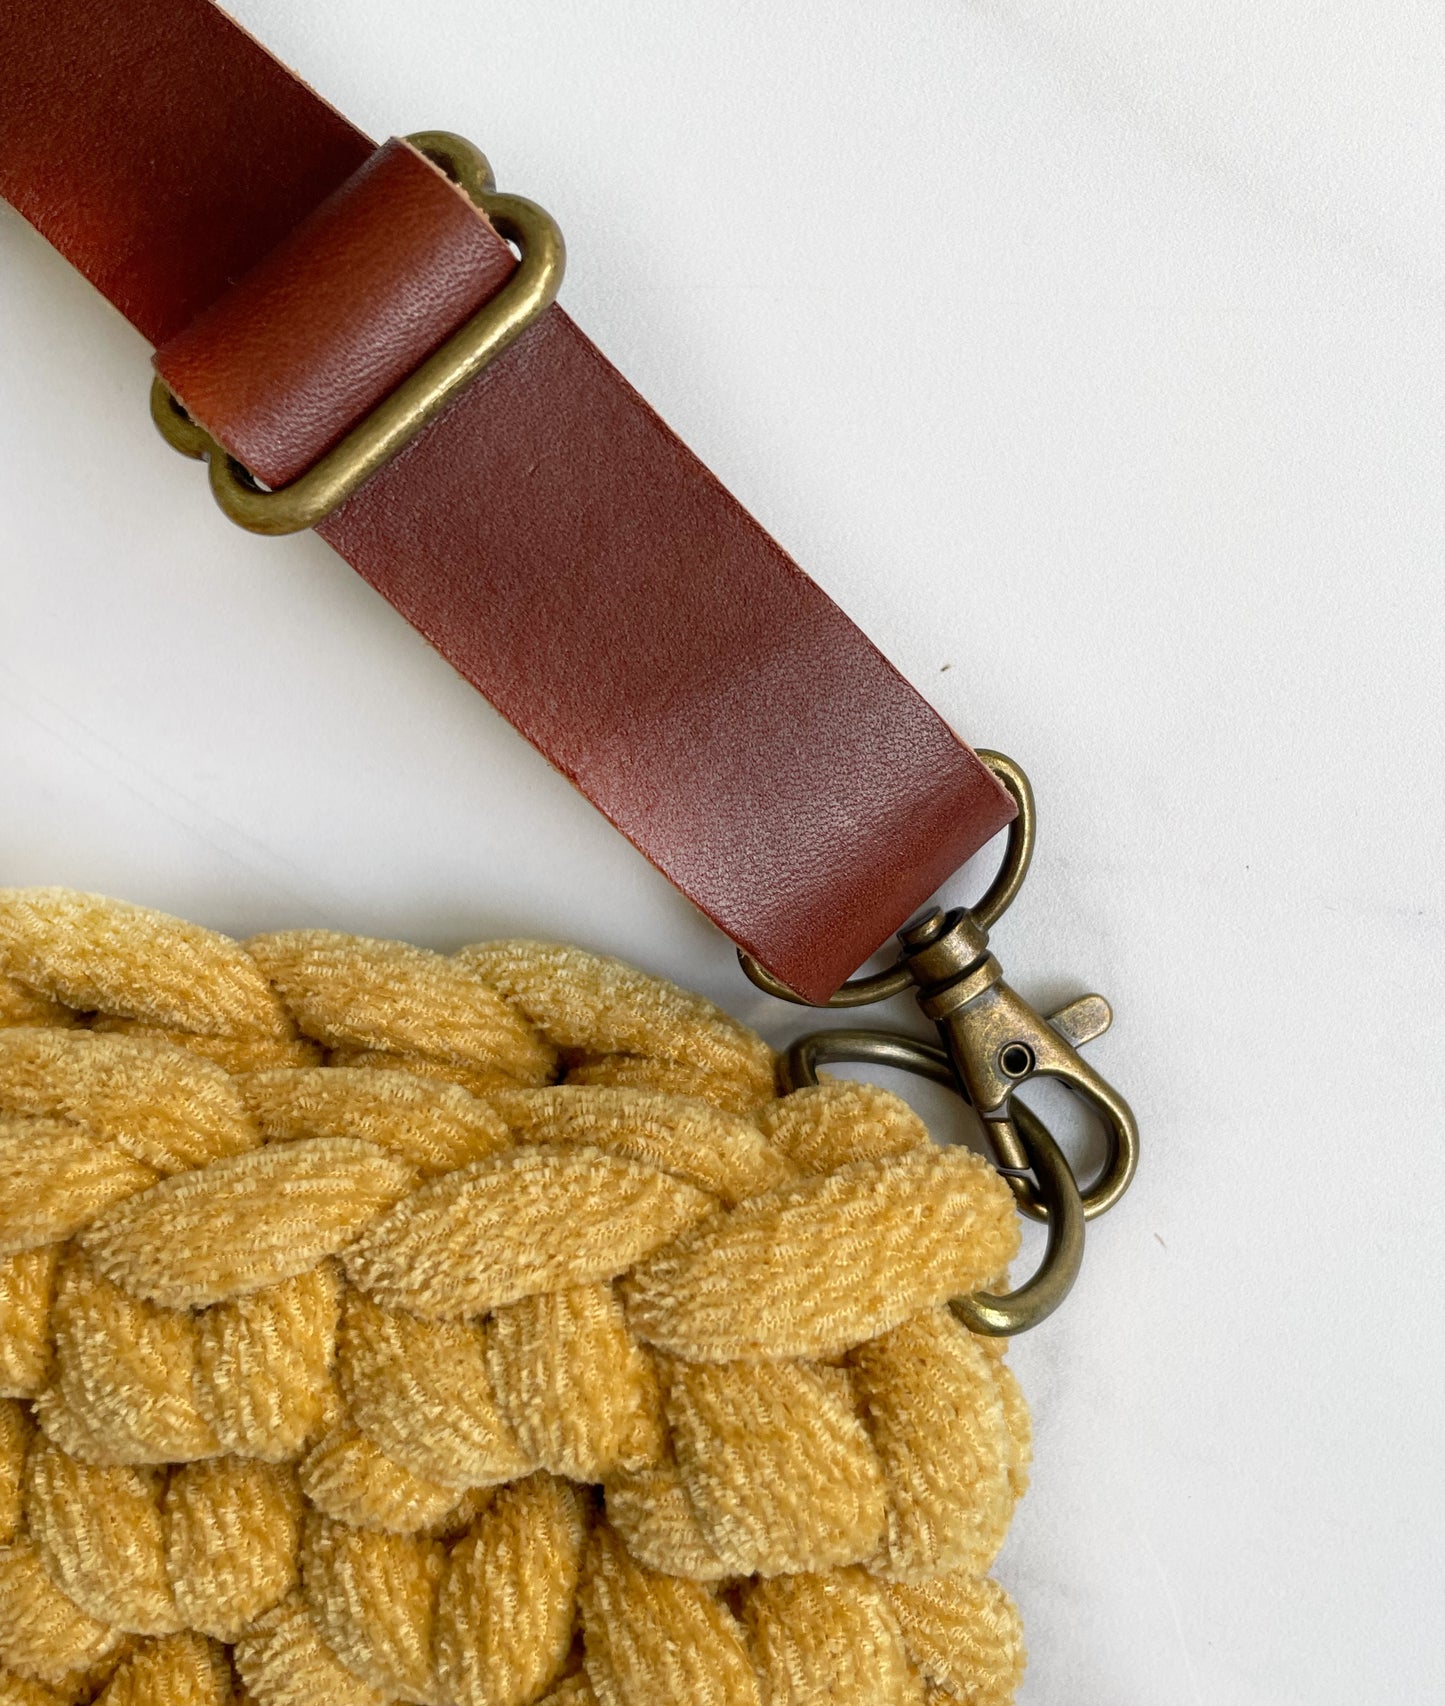 The Chelsea Bag: Chunky Crochet Crossbody Purse in Gold